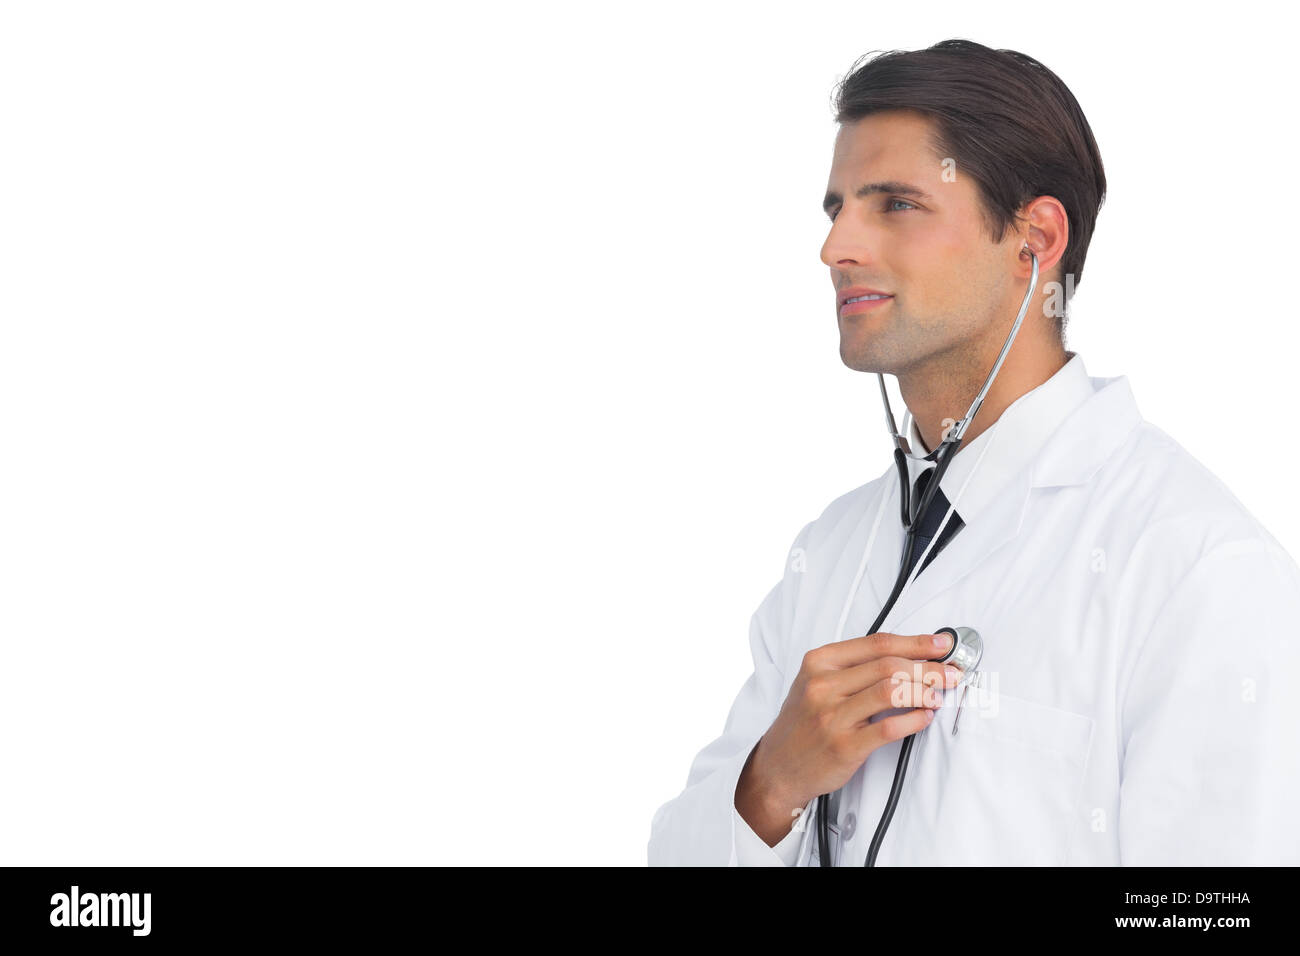 Smiling doctor holding stethoscope jusqu'à sa poitrine Banque D'Images